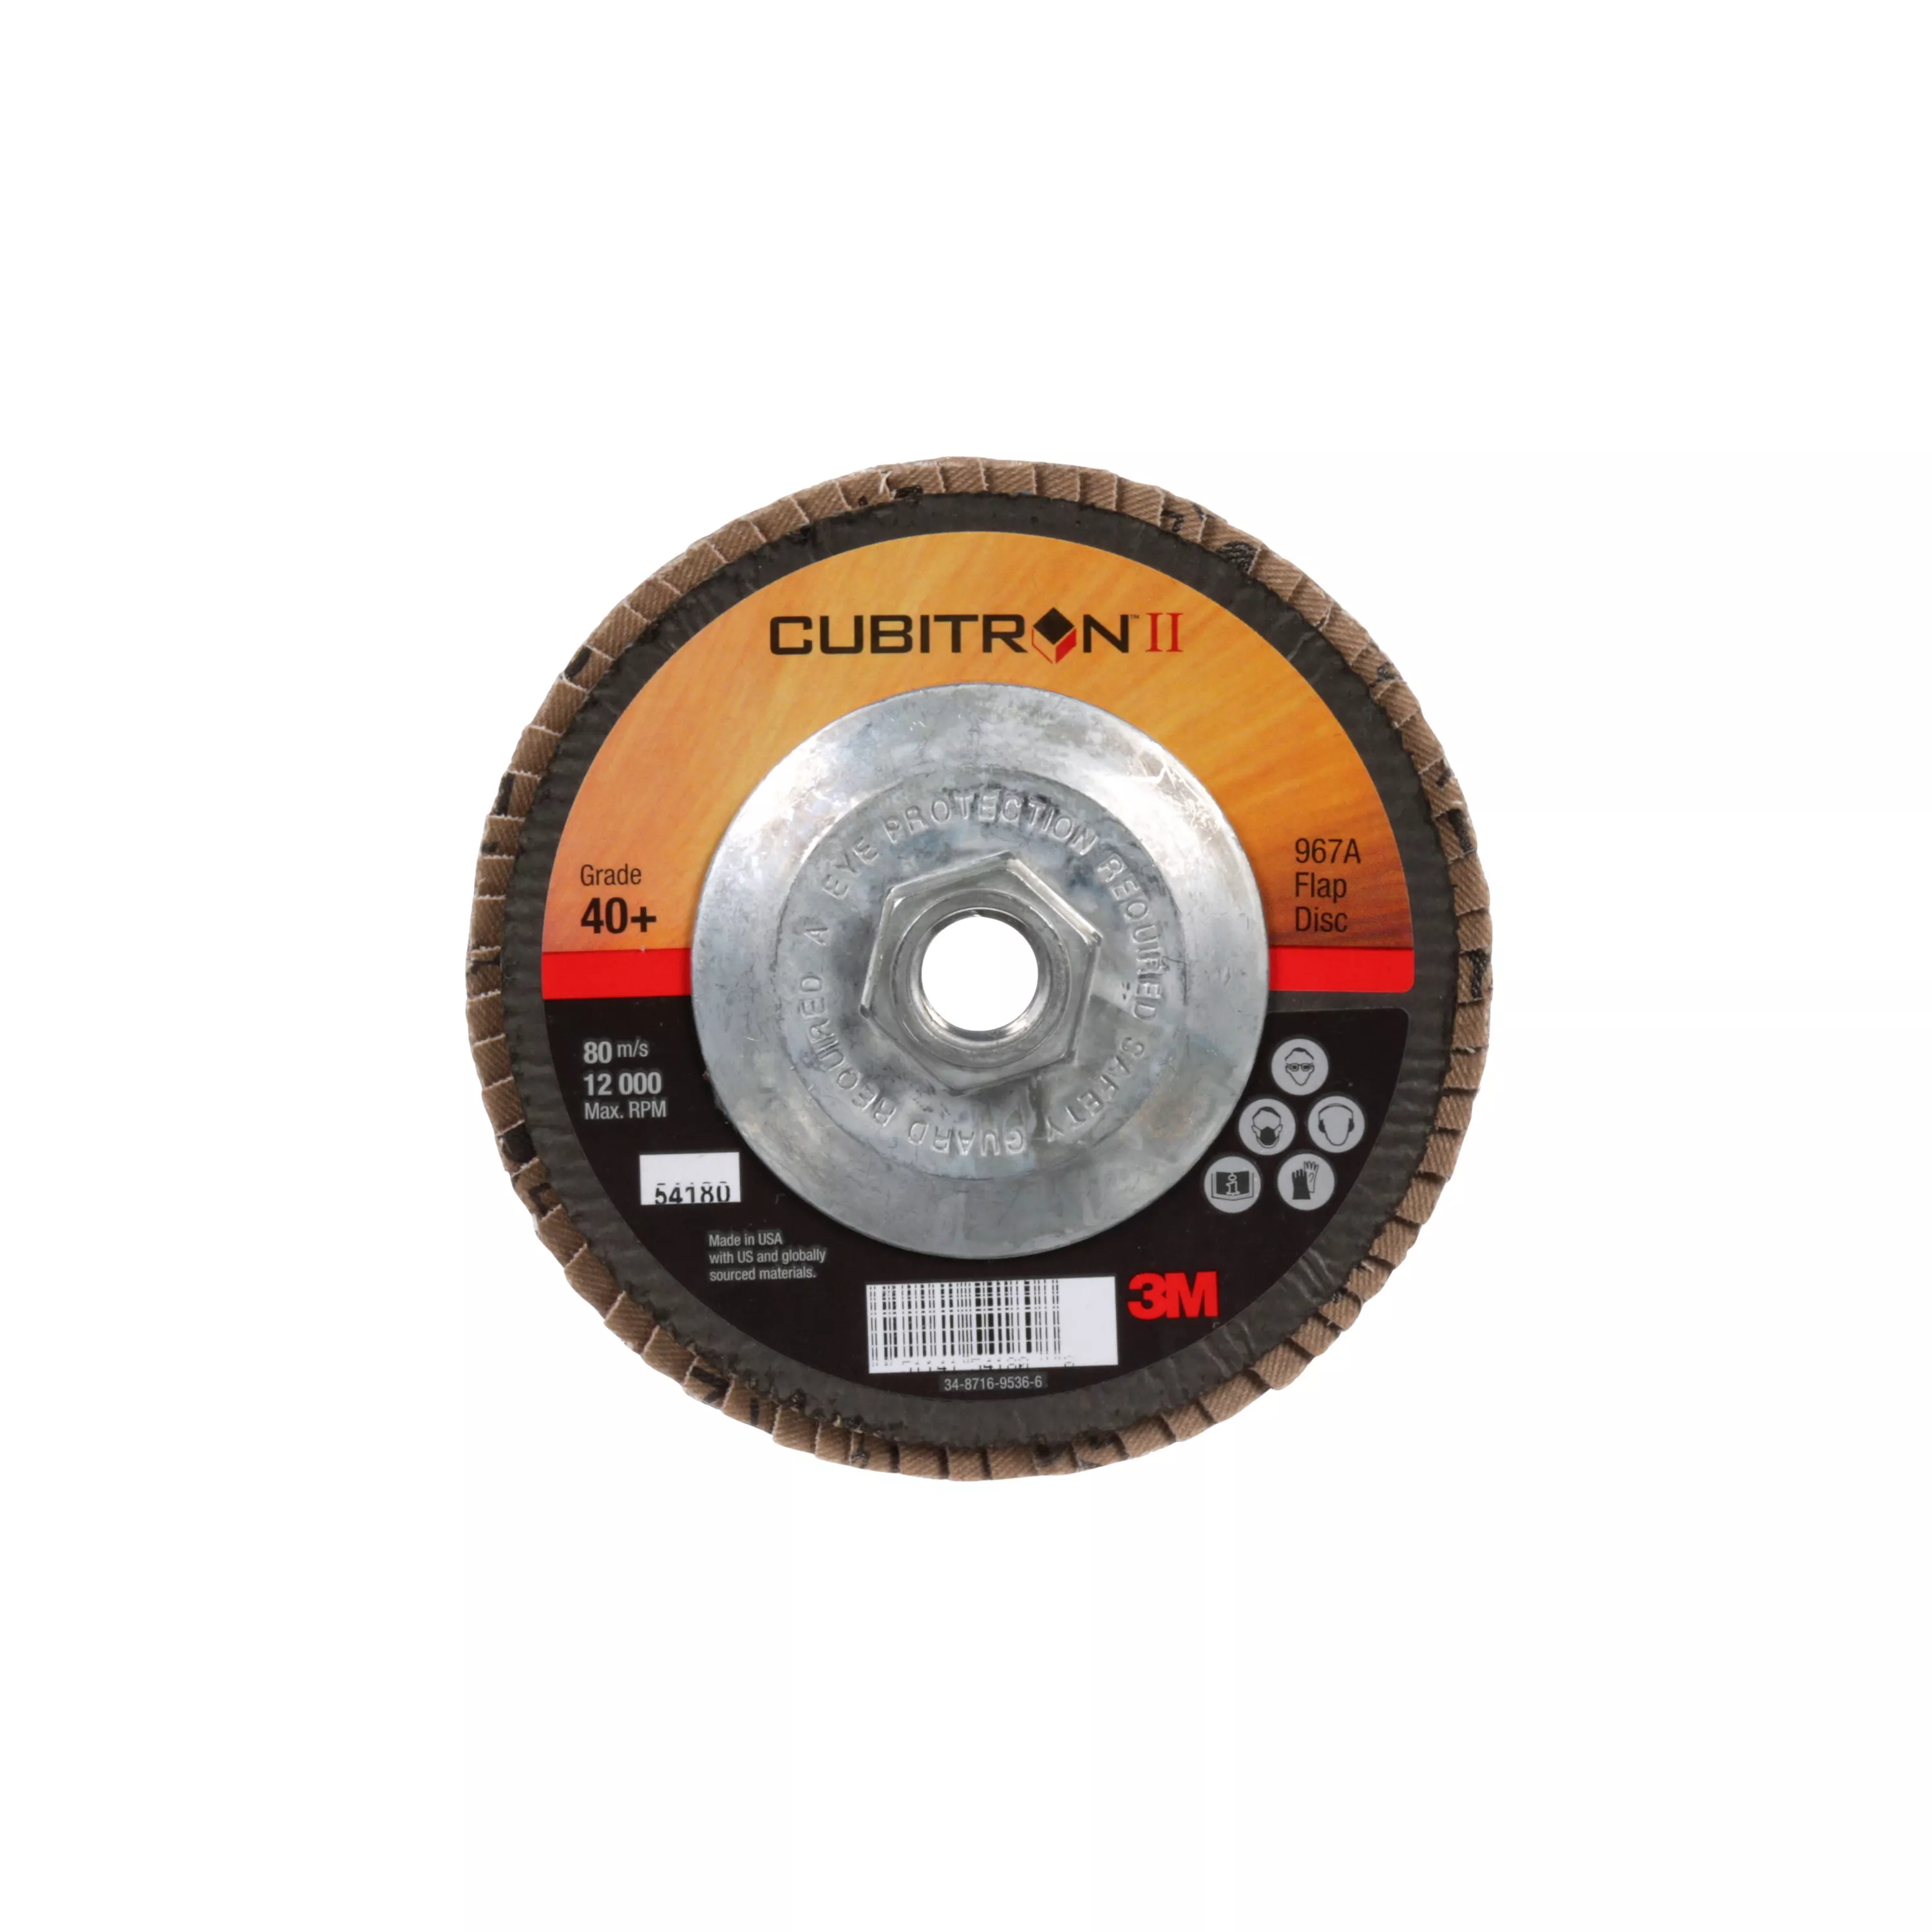 SKU 7100049327 | 3M™ Cubitron™ II Flap Disc 967A